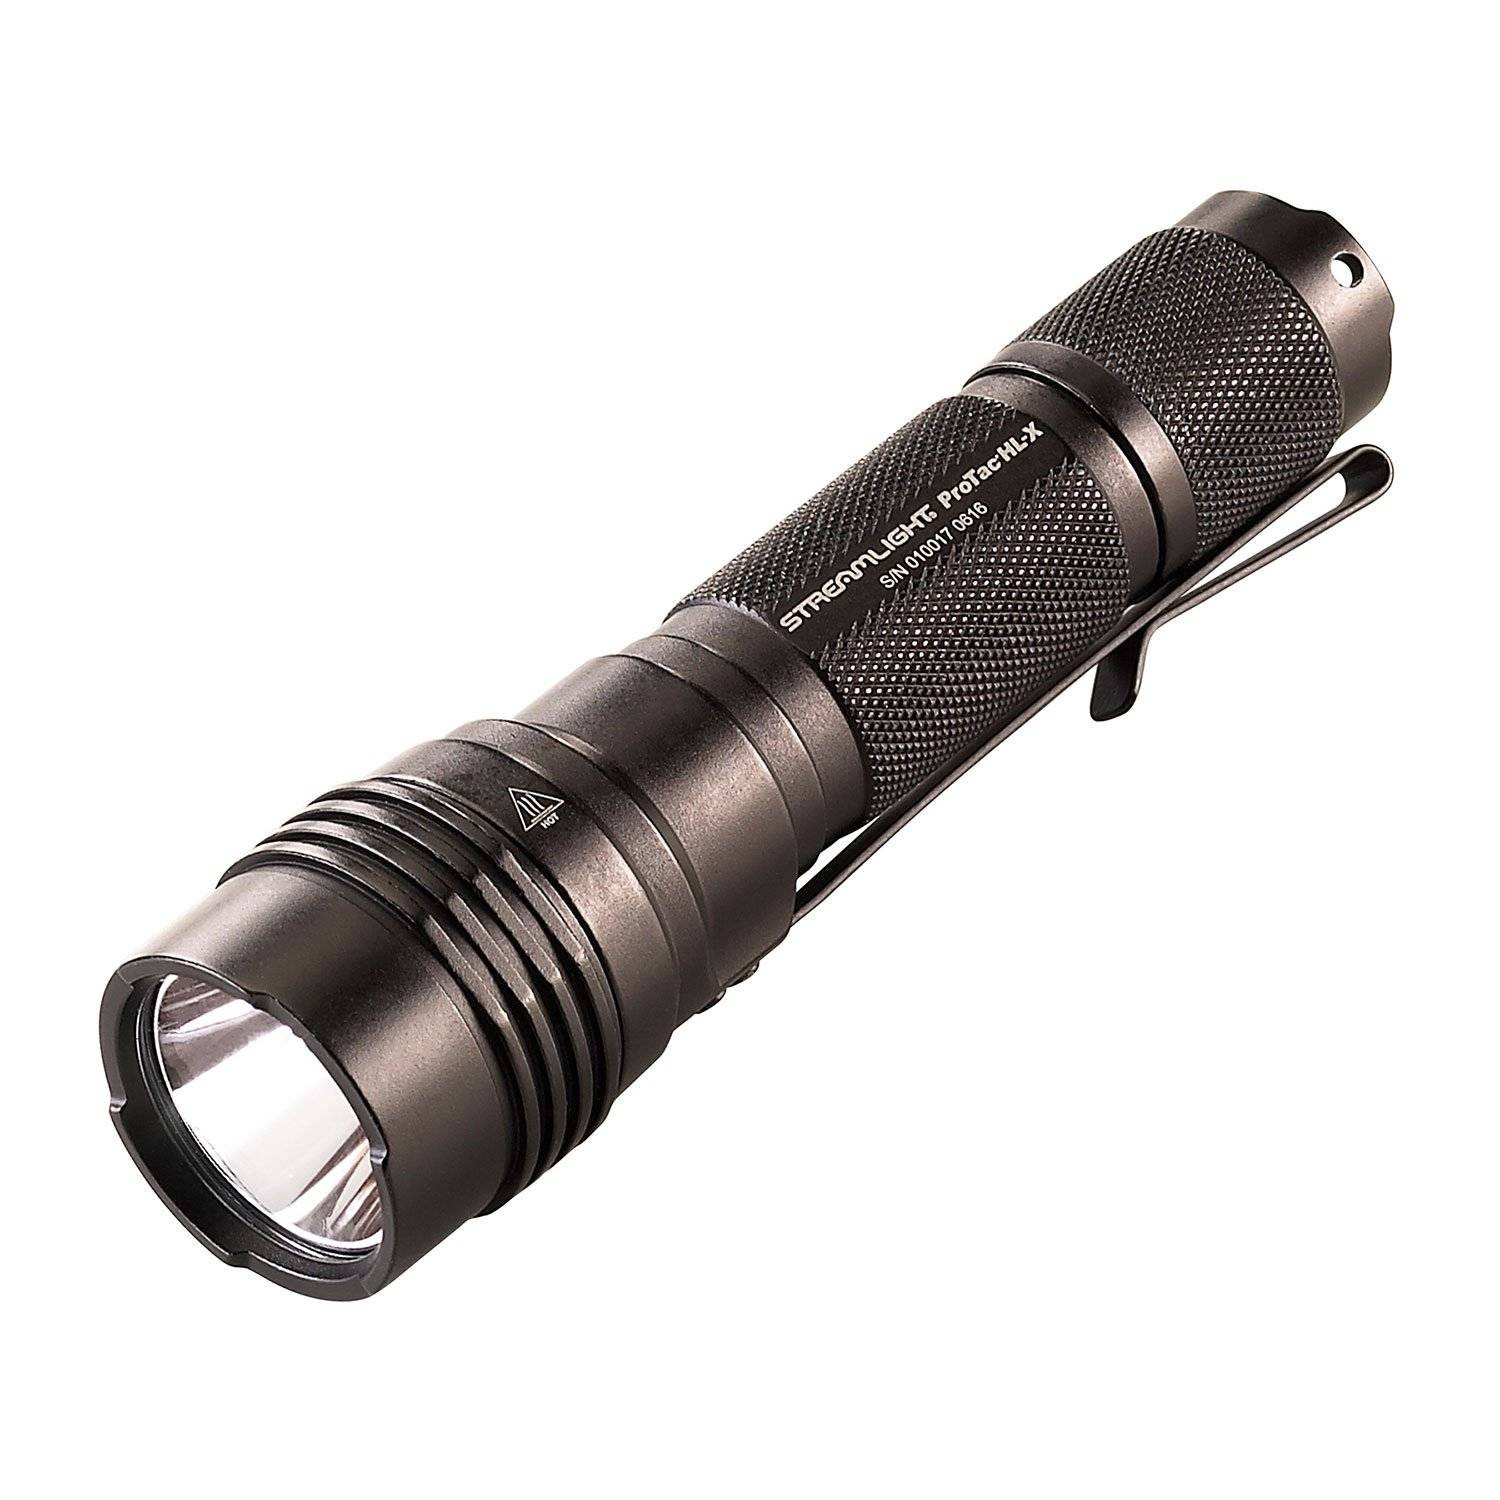 Streamlight ProTac HL-X Dual-Fuel High-lumen Tactical Light